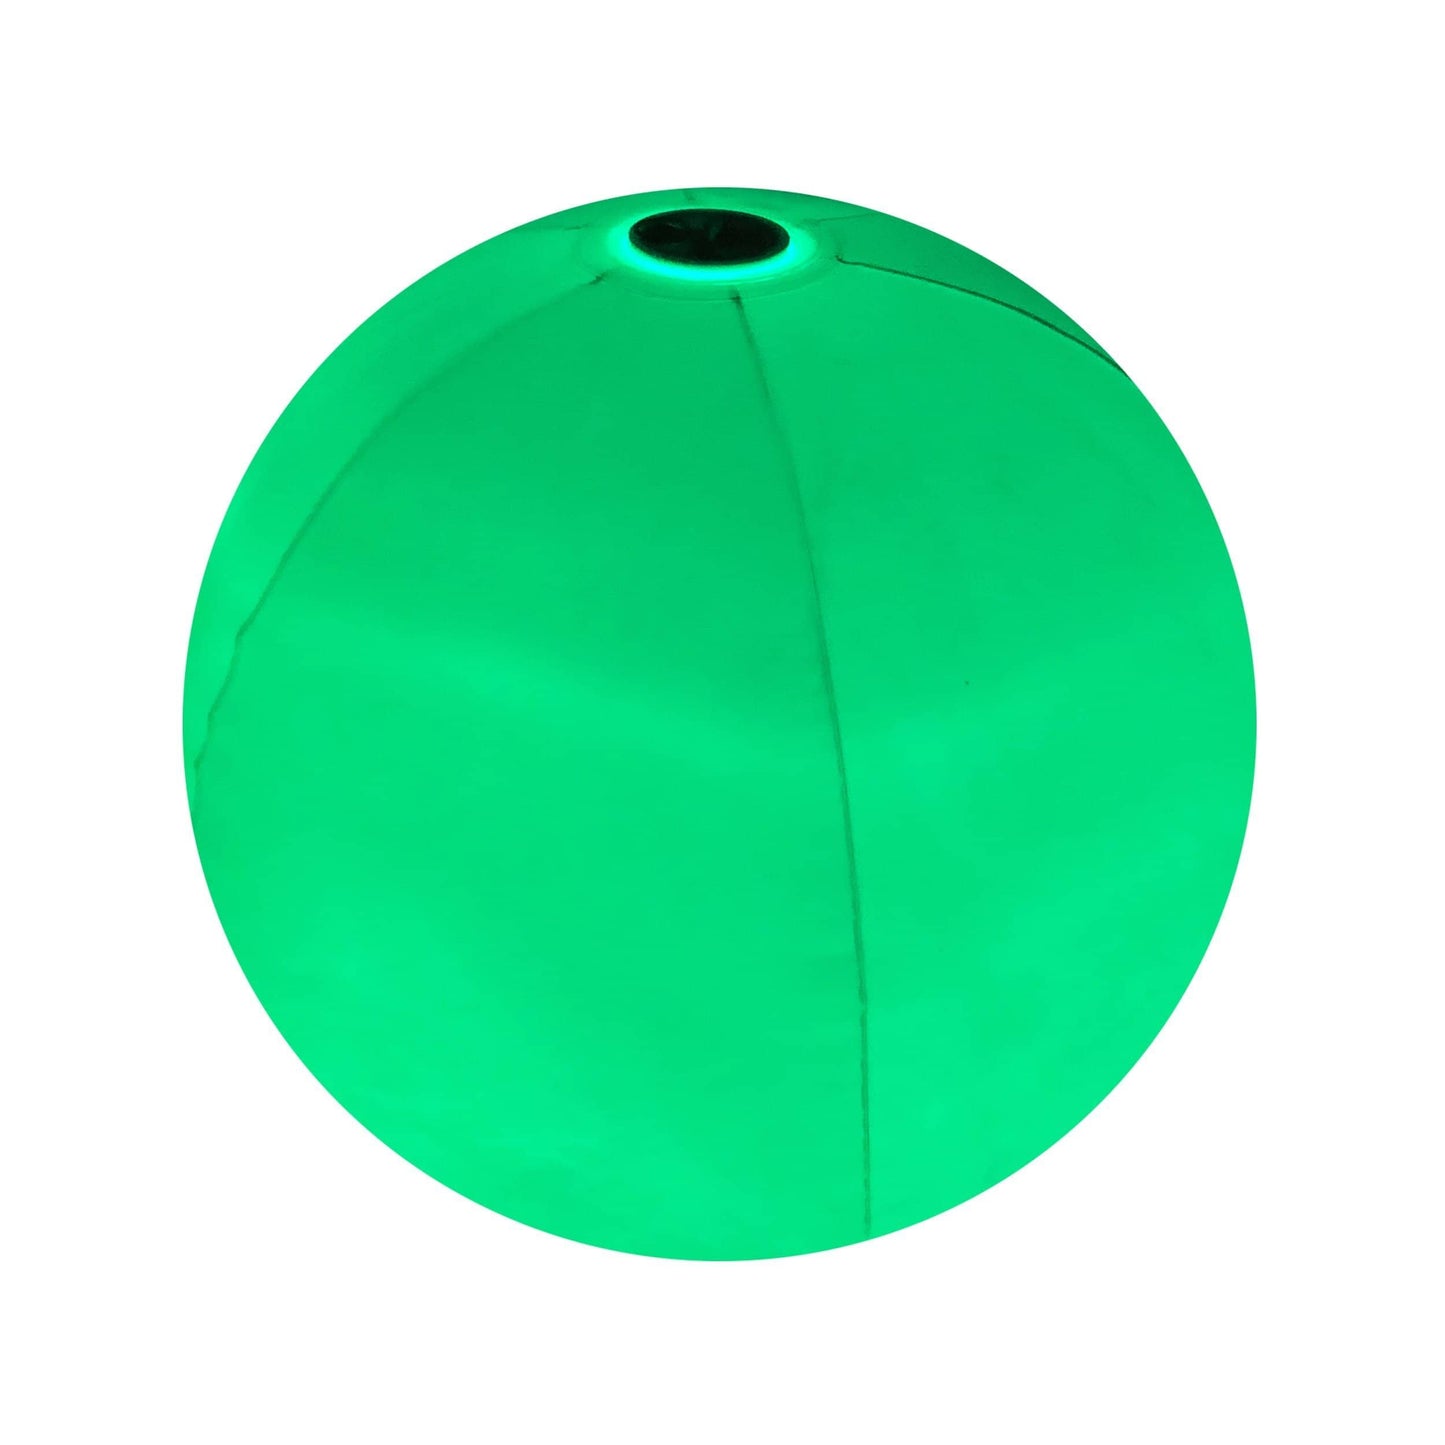 Inflatable Beach Ball Illuminated LED PoolCandy